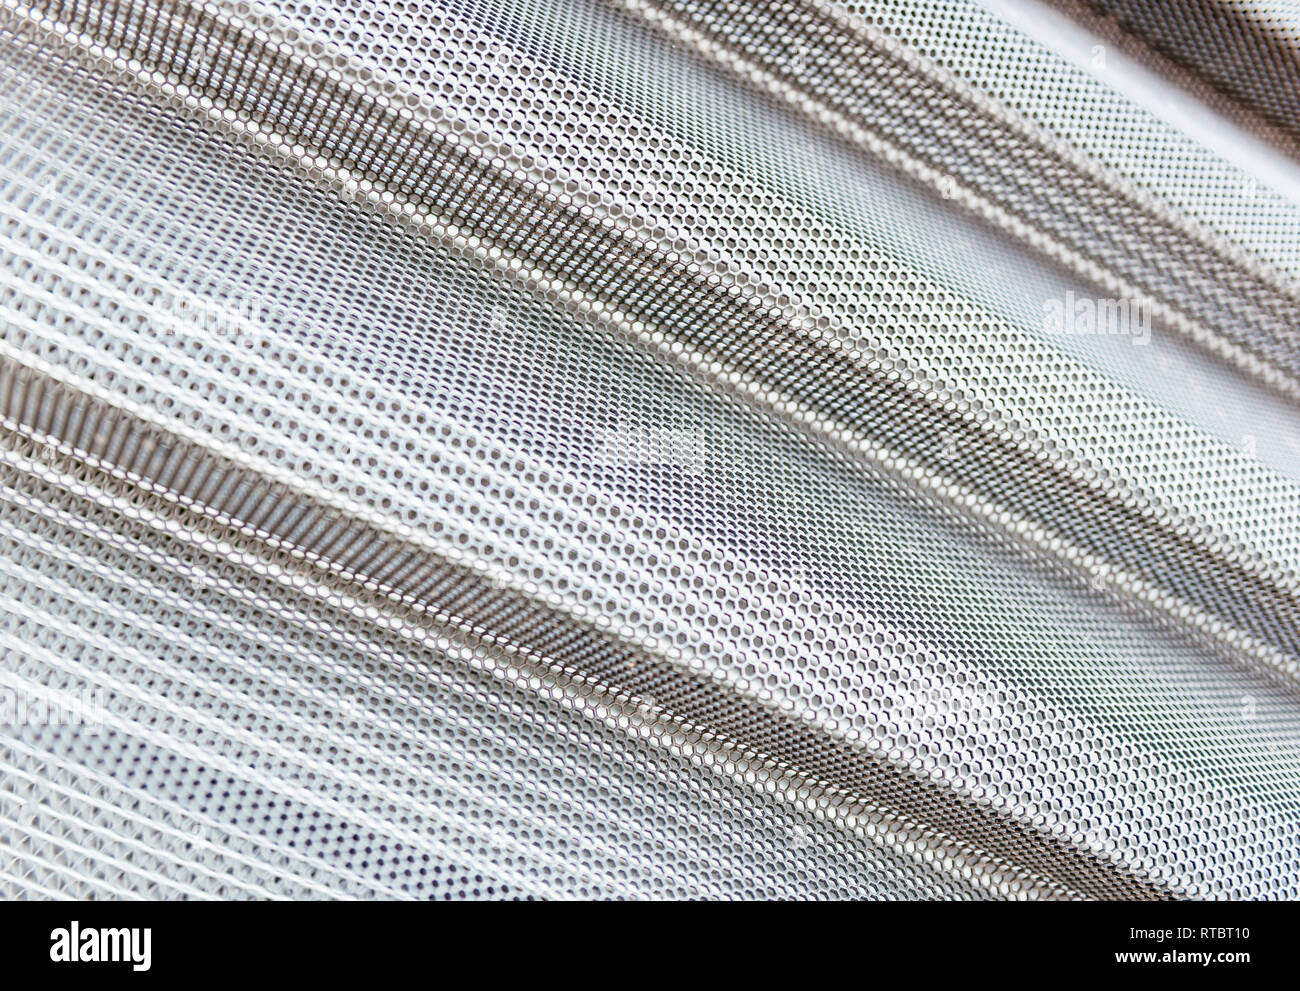 Aluminium metallic surface with abstract pattern on modern industrial equipment Stock Photo